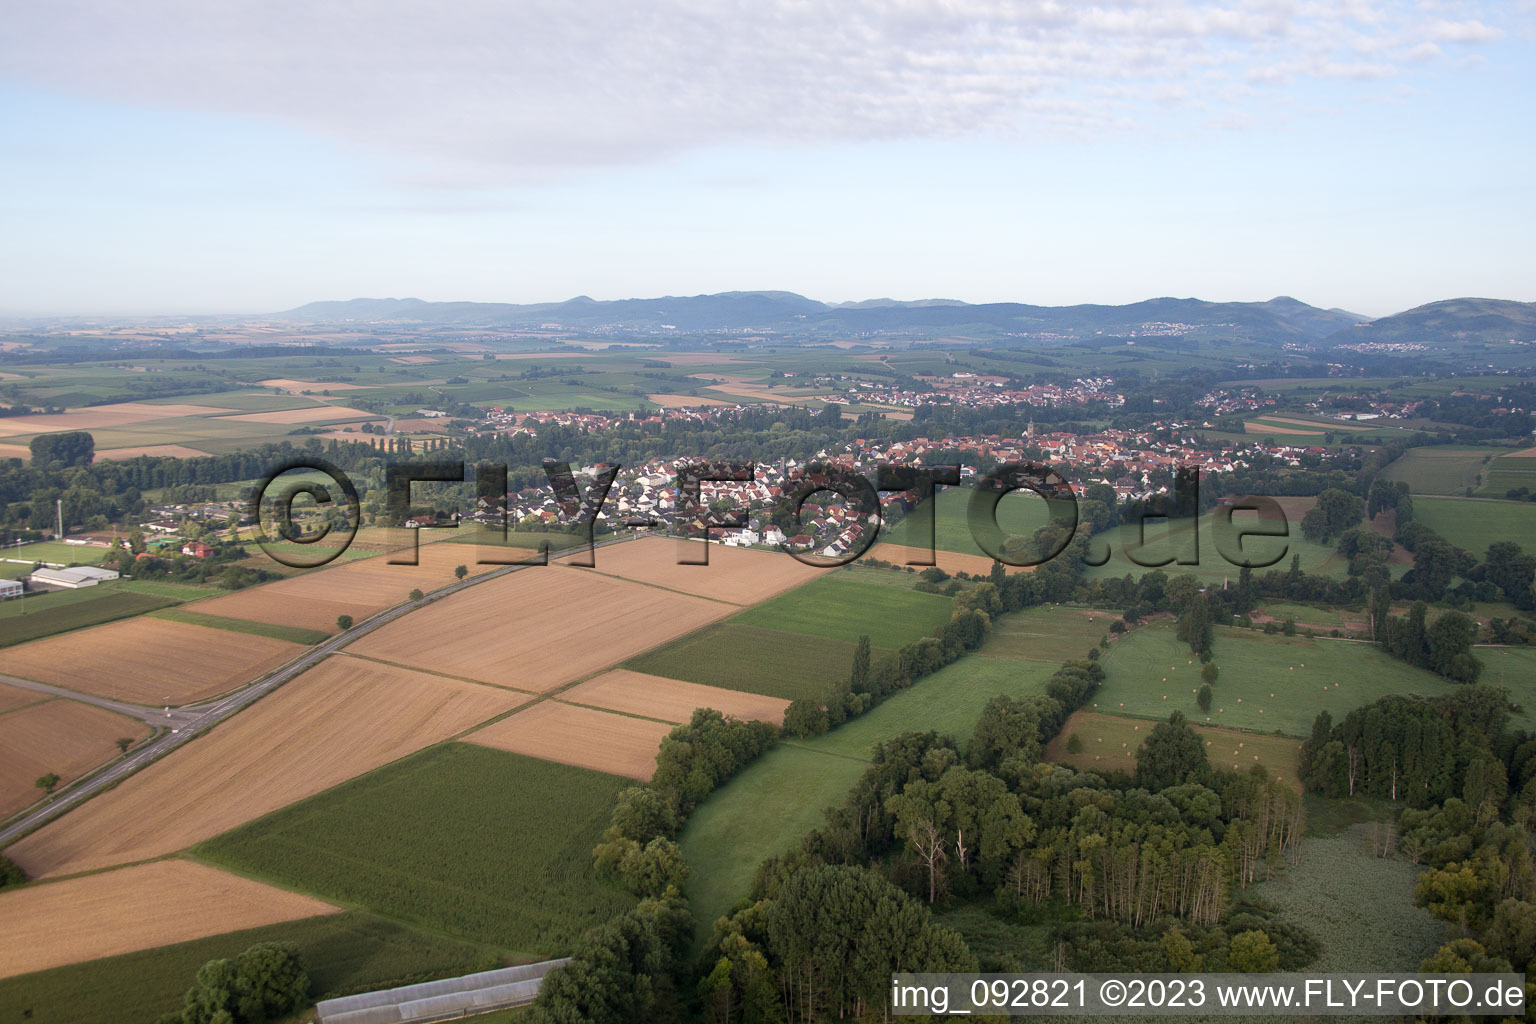 Aerial photograpy of District Billigheim in Billigheim-Ingenheim in the state Rhineland-Palatinate, Germany